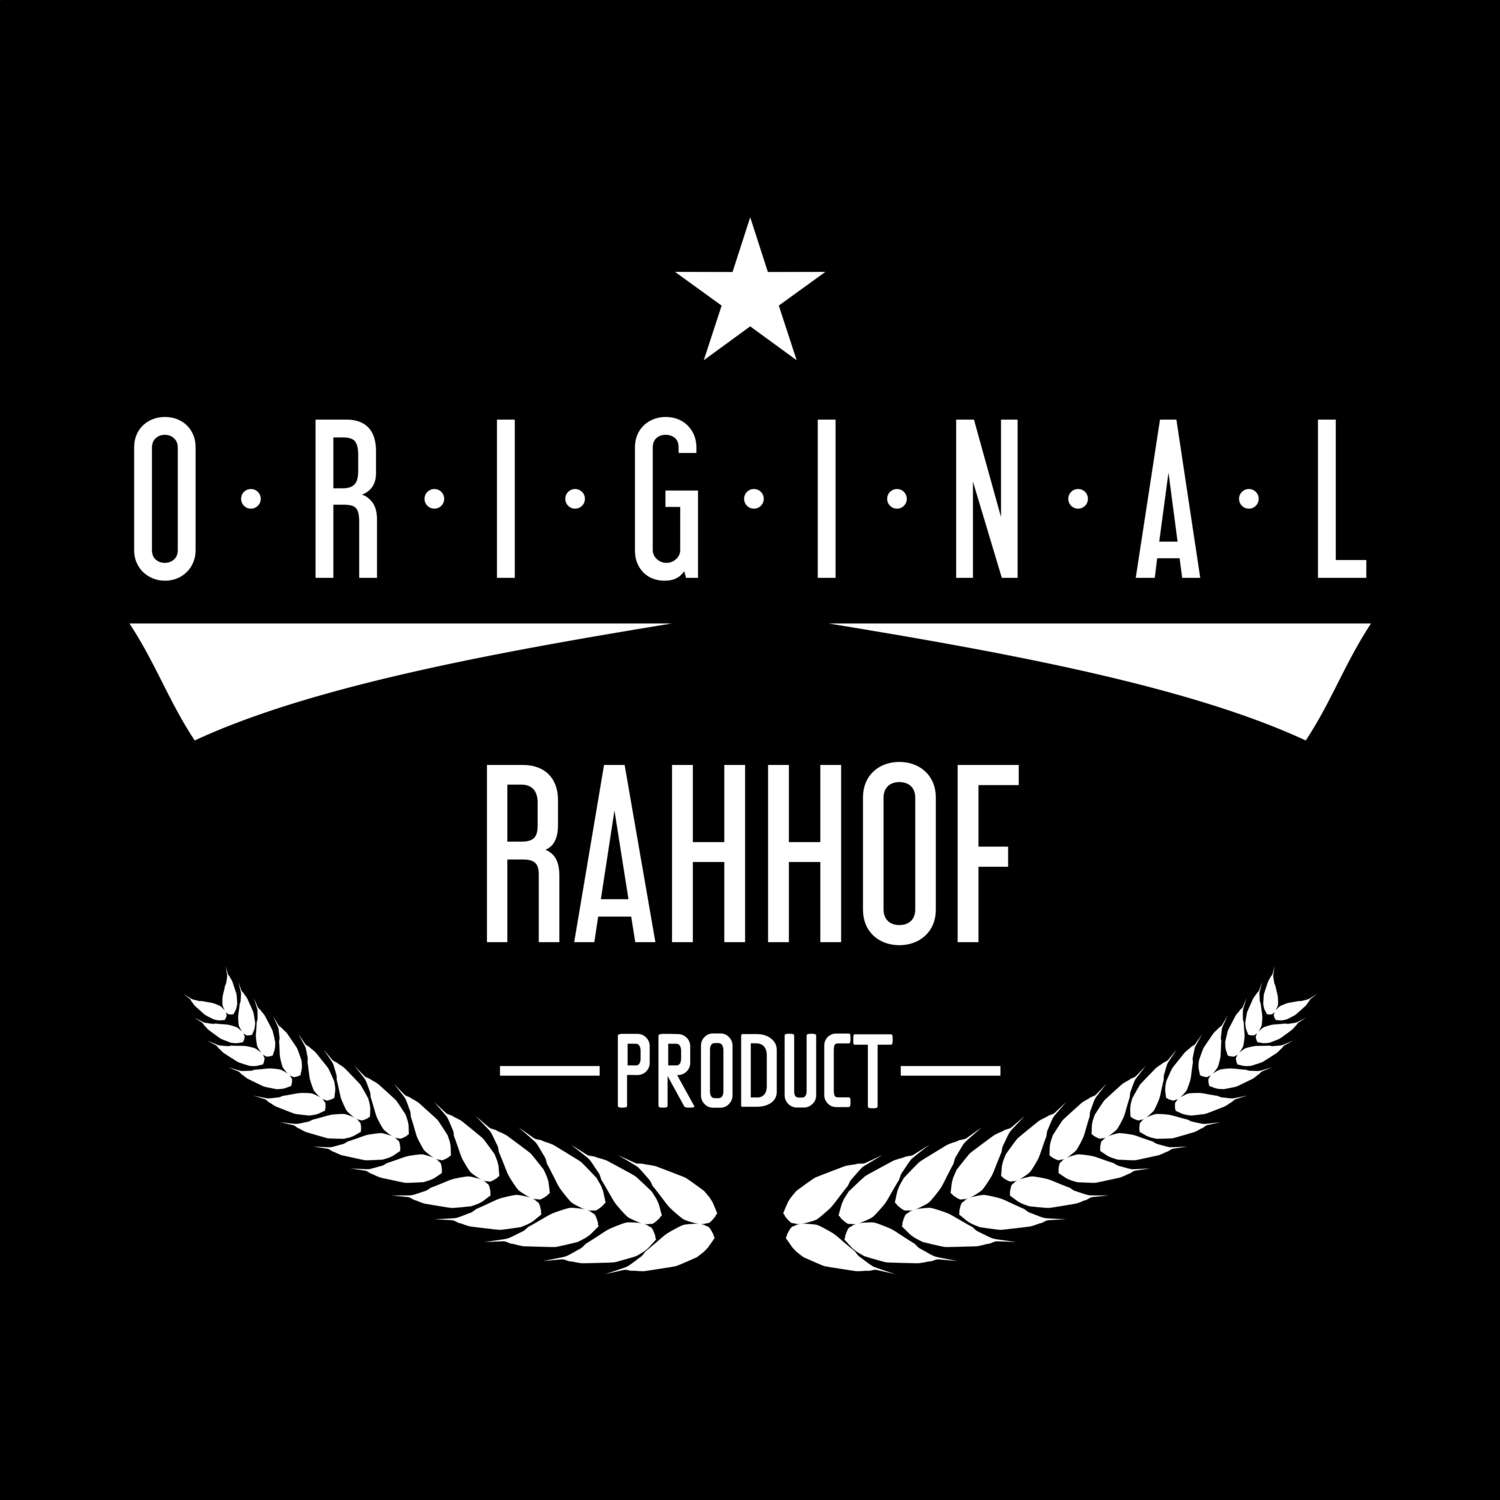 Rahhof T-Shirt »Original Product«